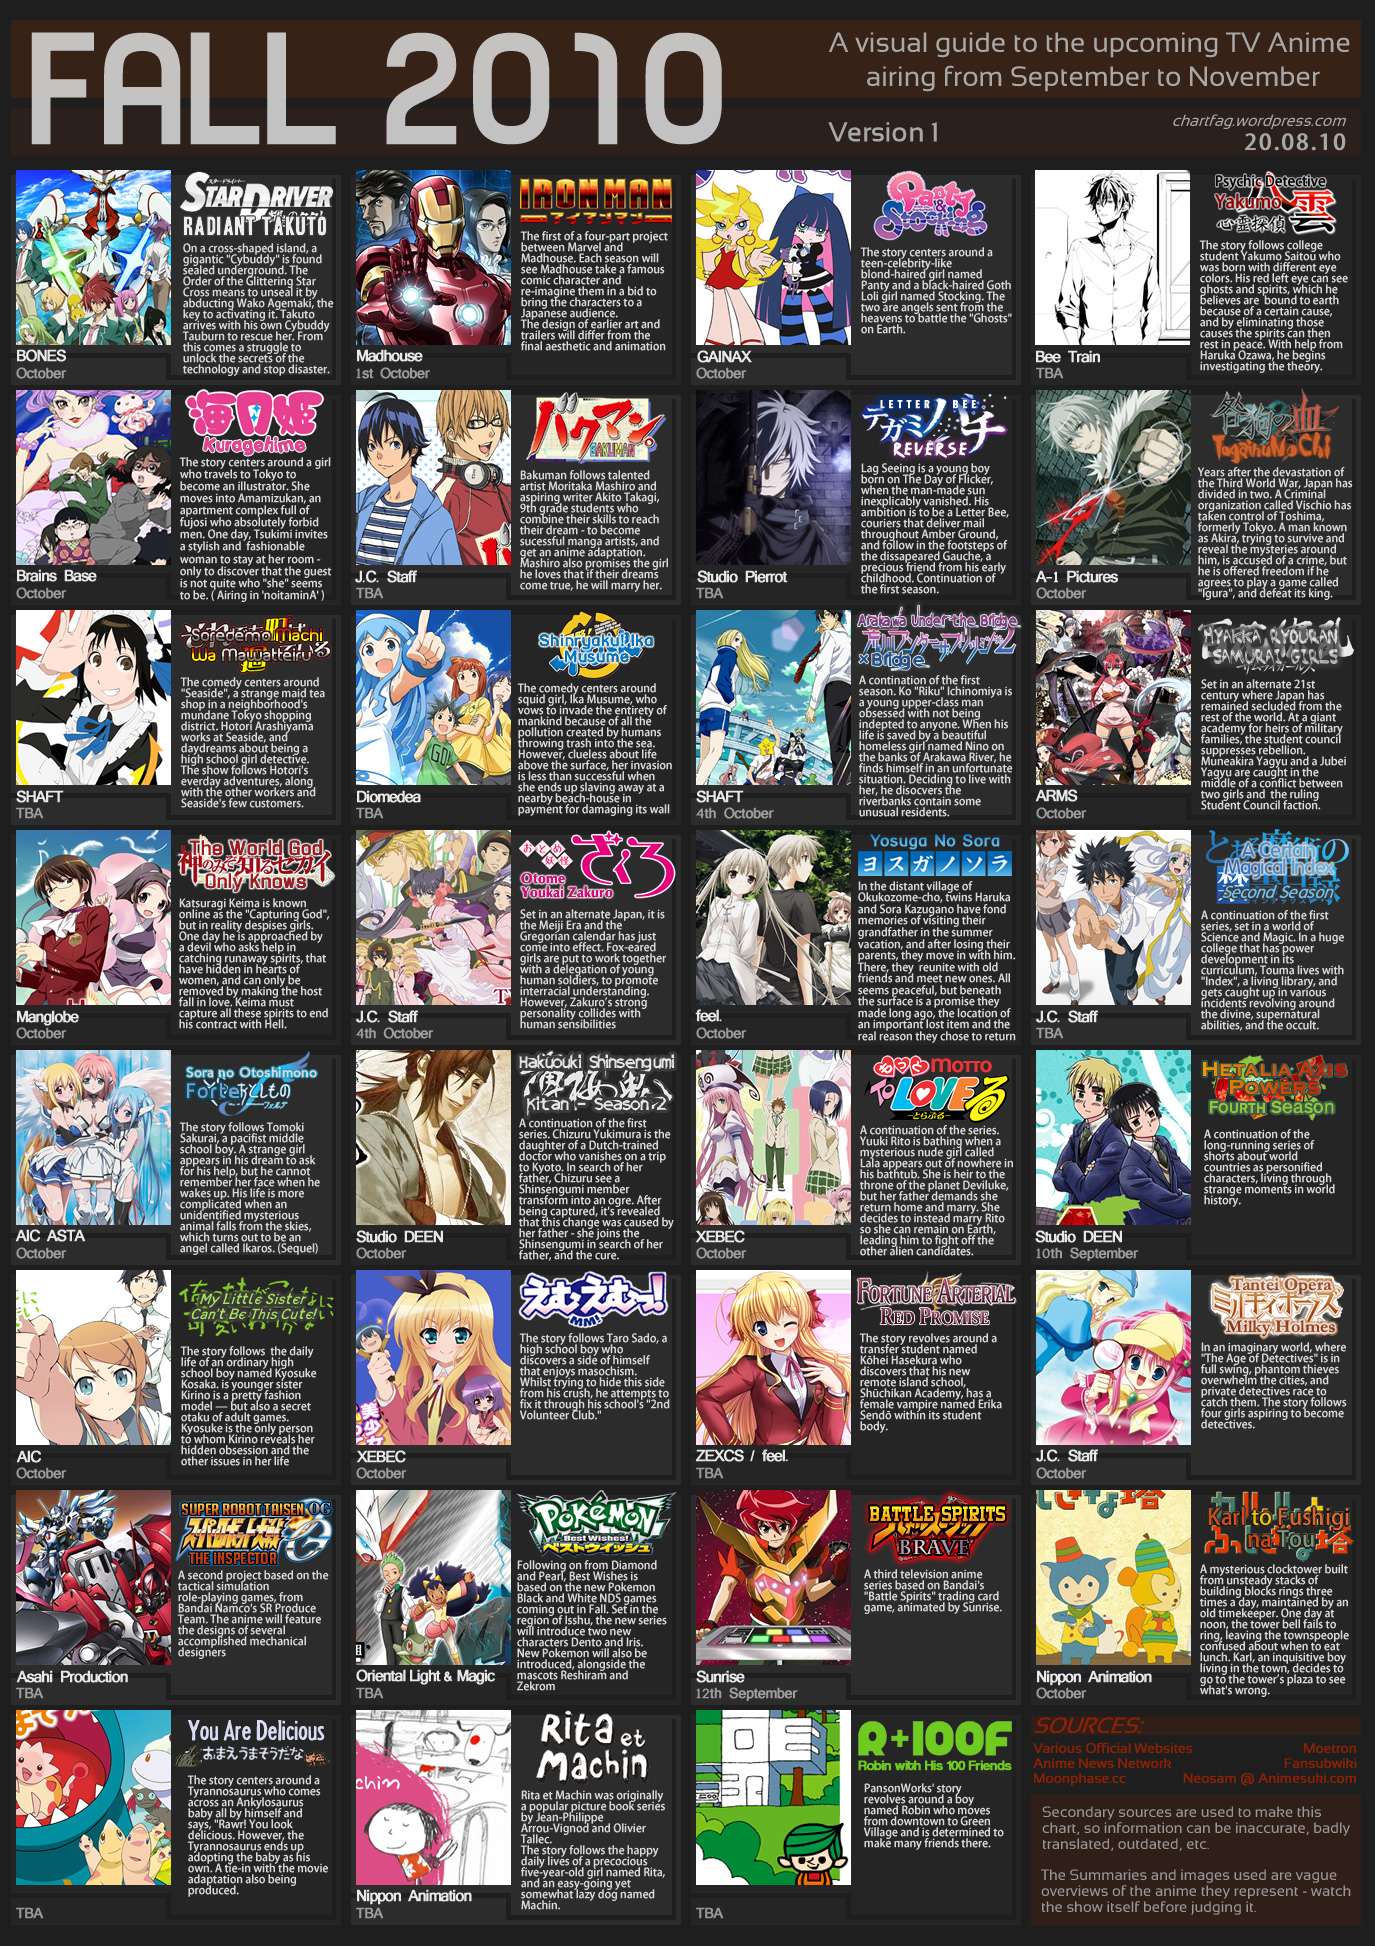 New Anime Chart